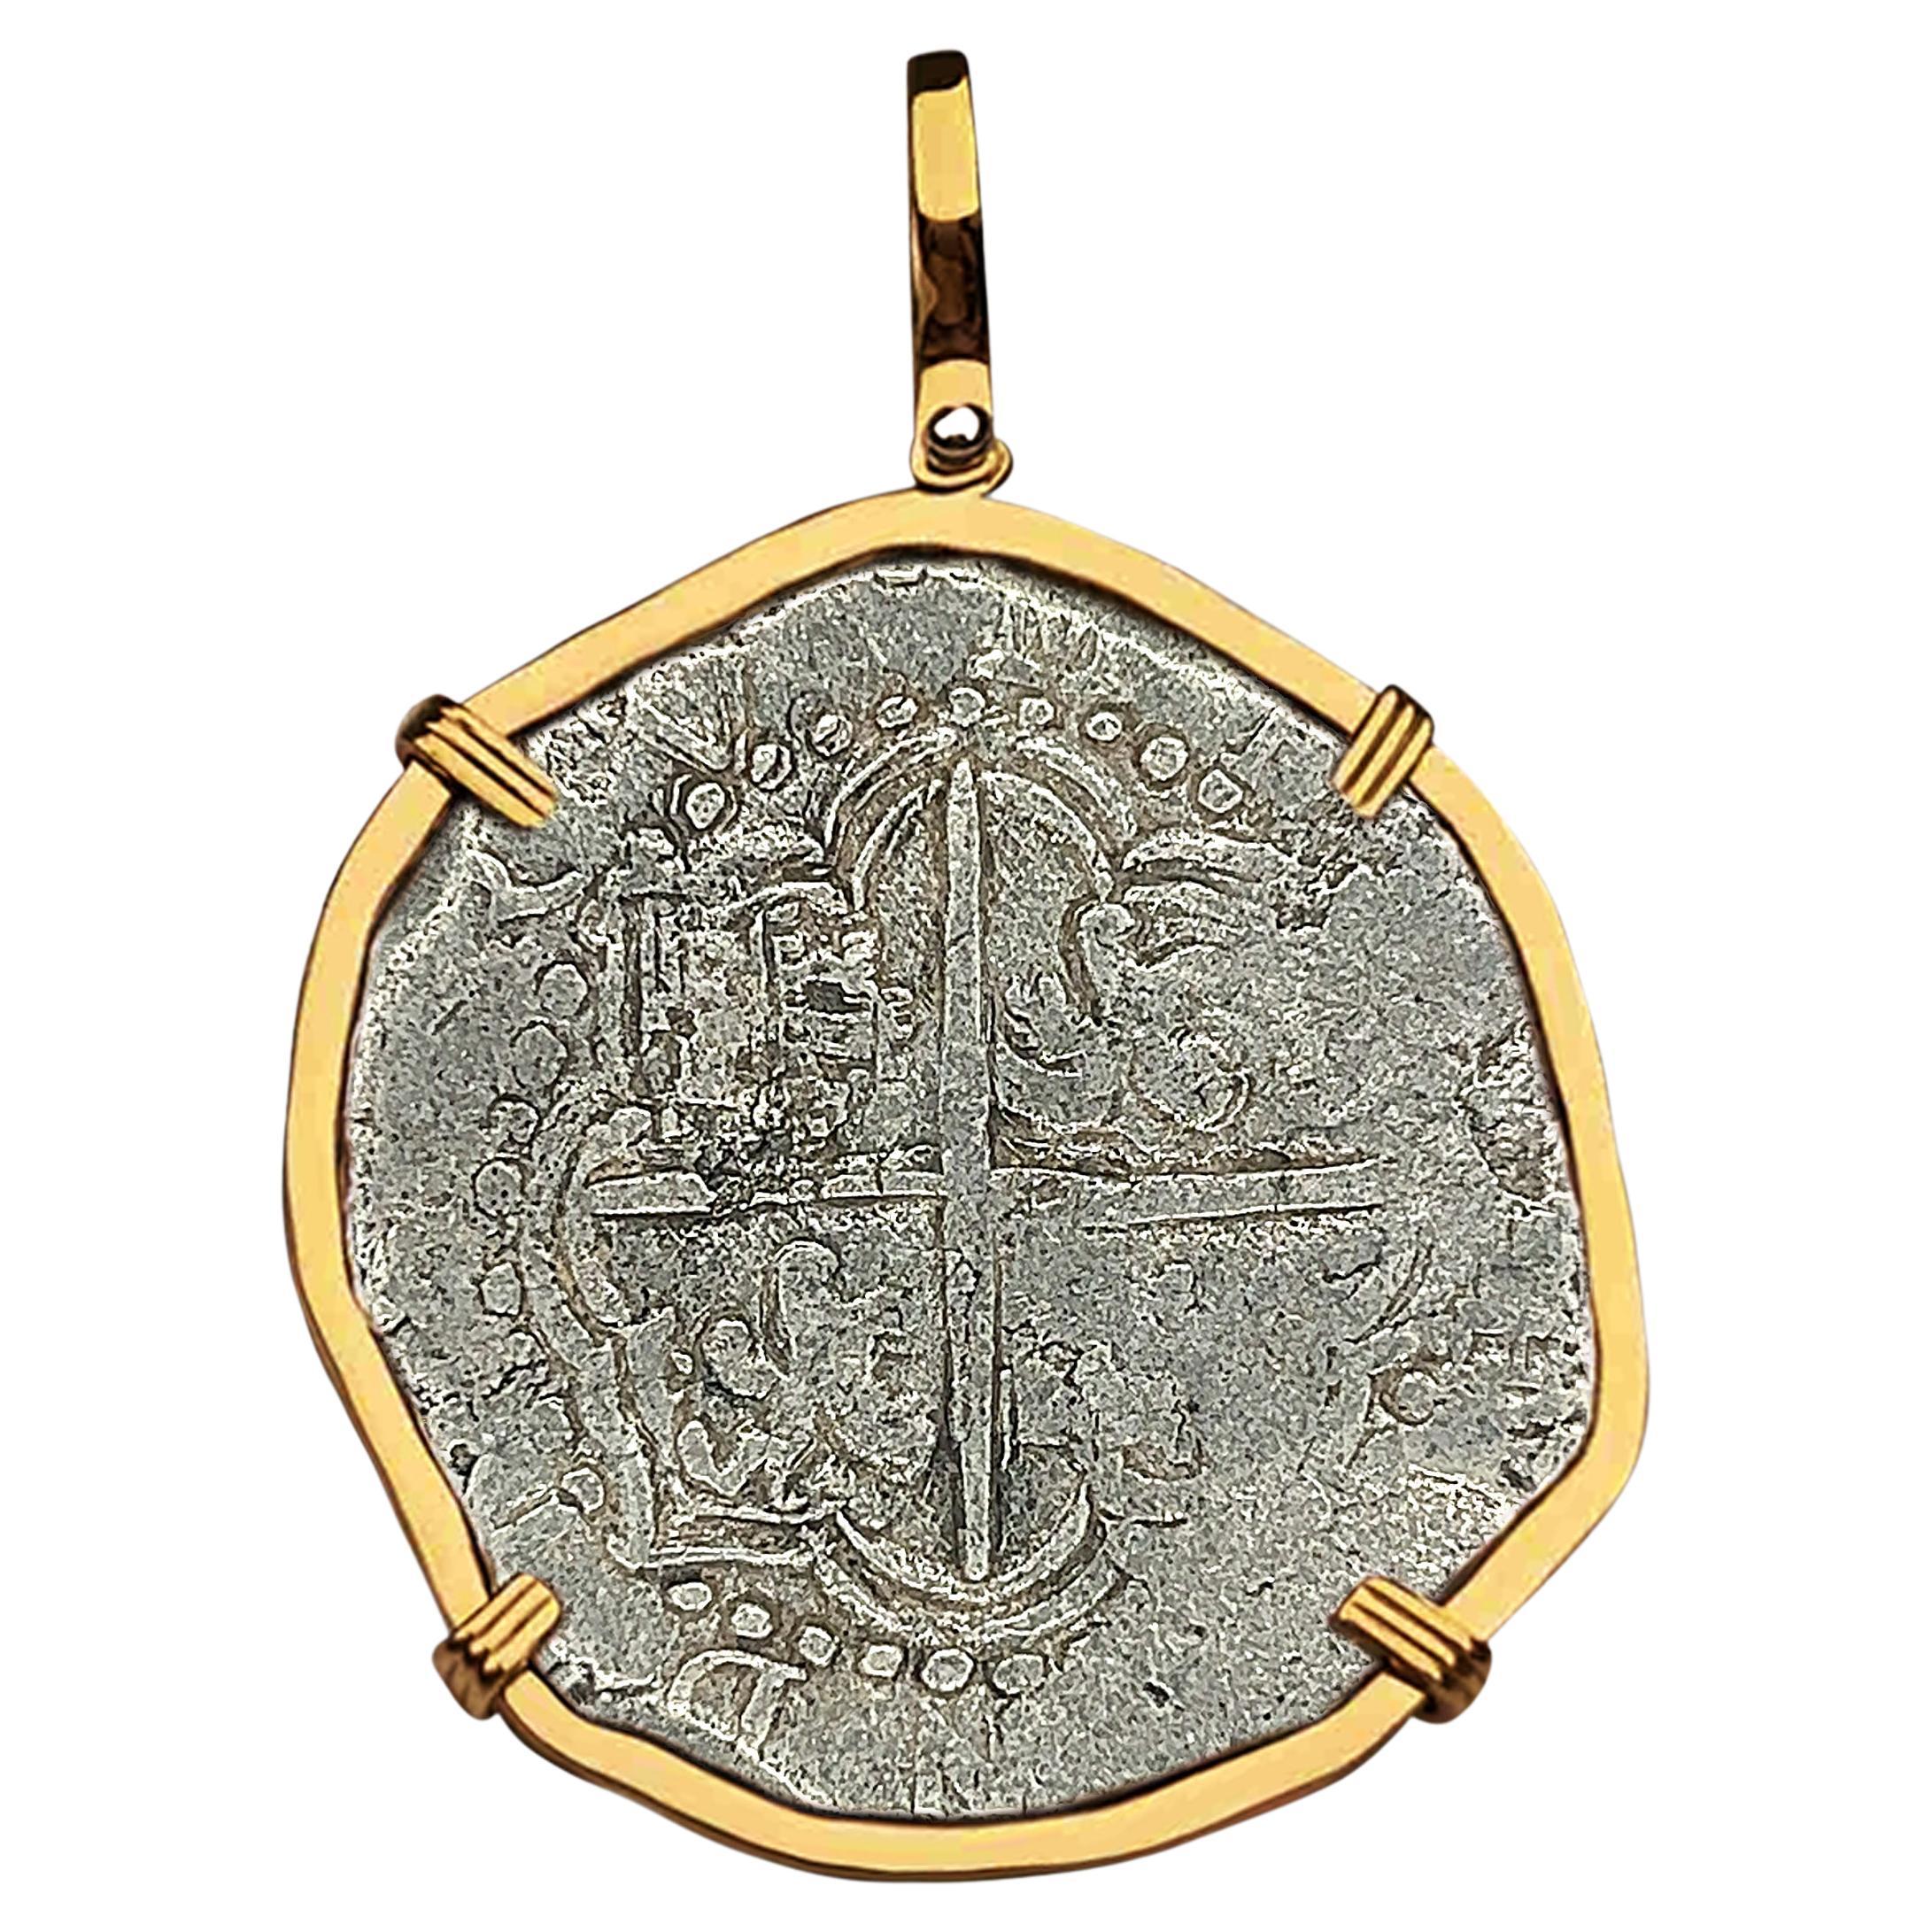 Atocha Shipwreck 8 Reale Grade 2 Potosi Mint Coin and Gold Pendant For Sale